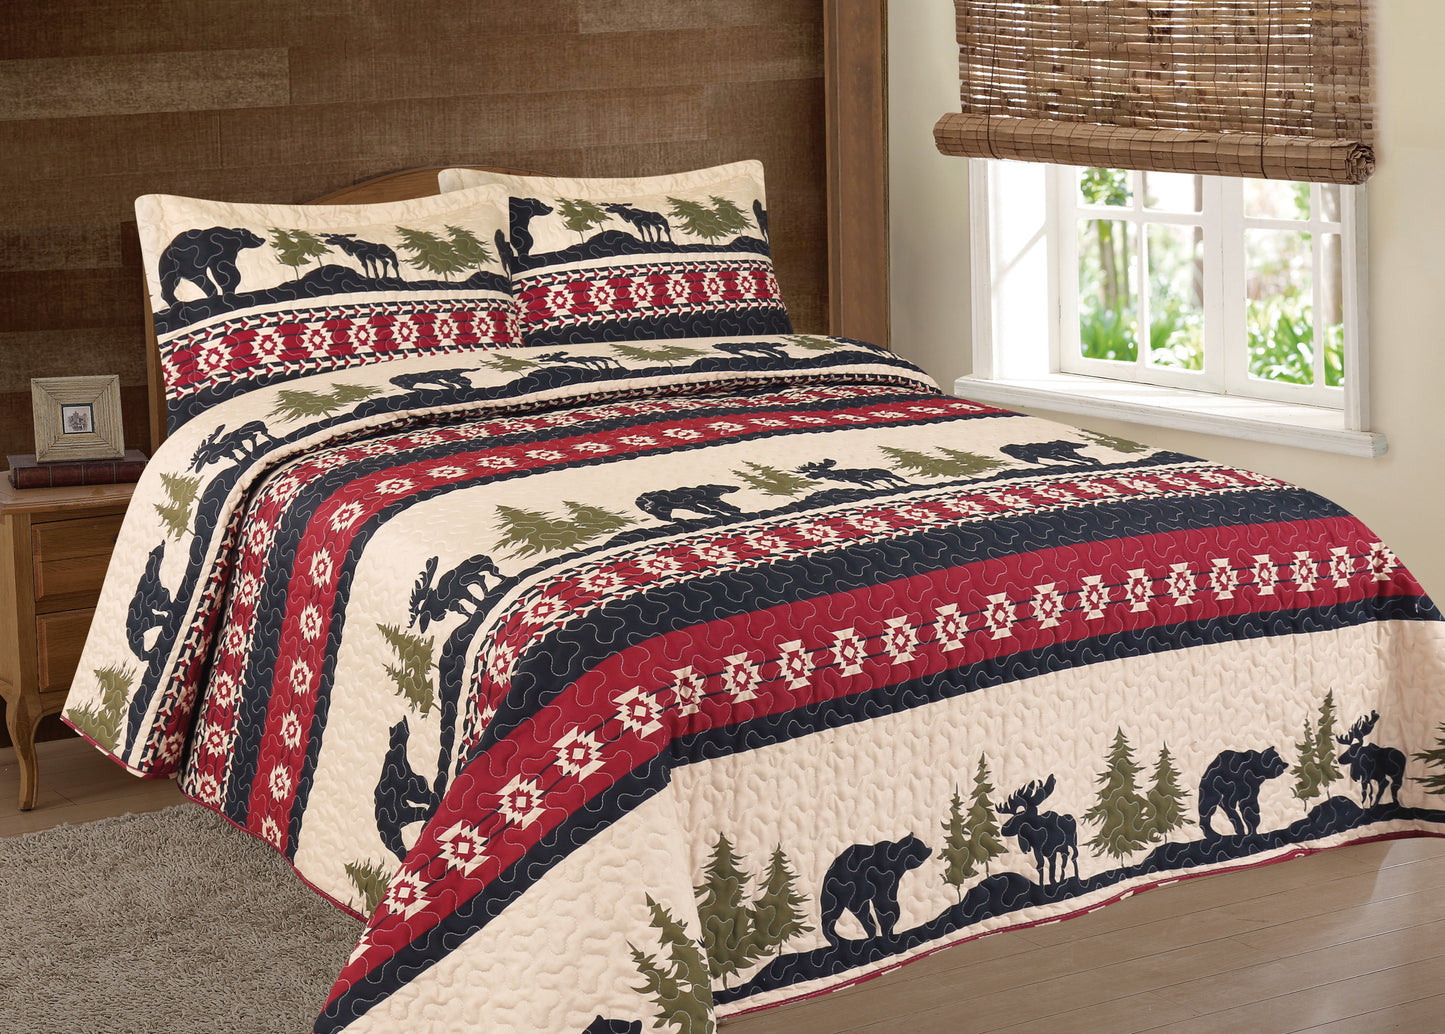 Bears in the mountain 3pc Bedspread